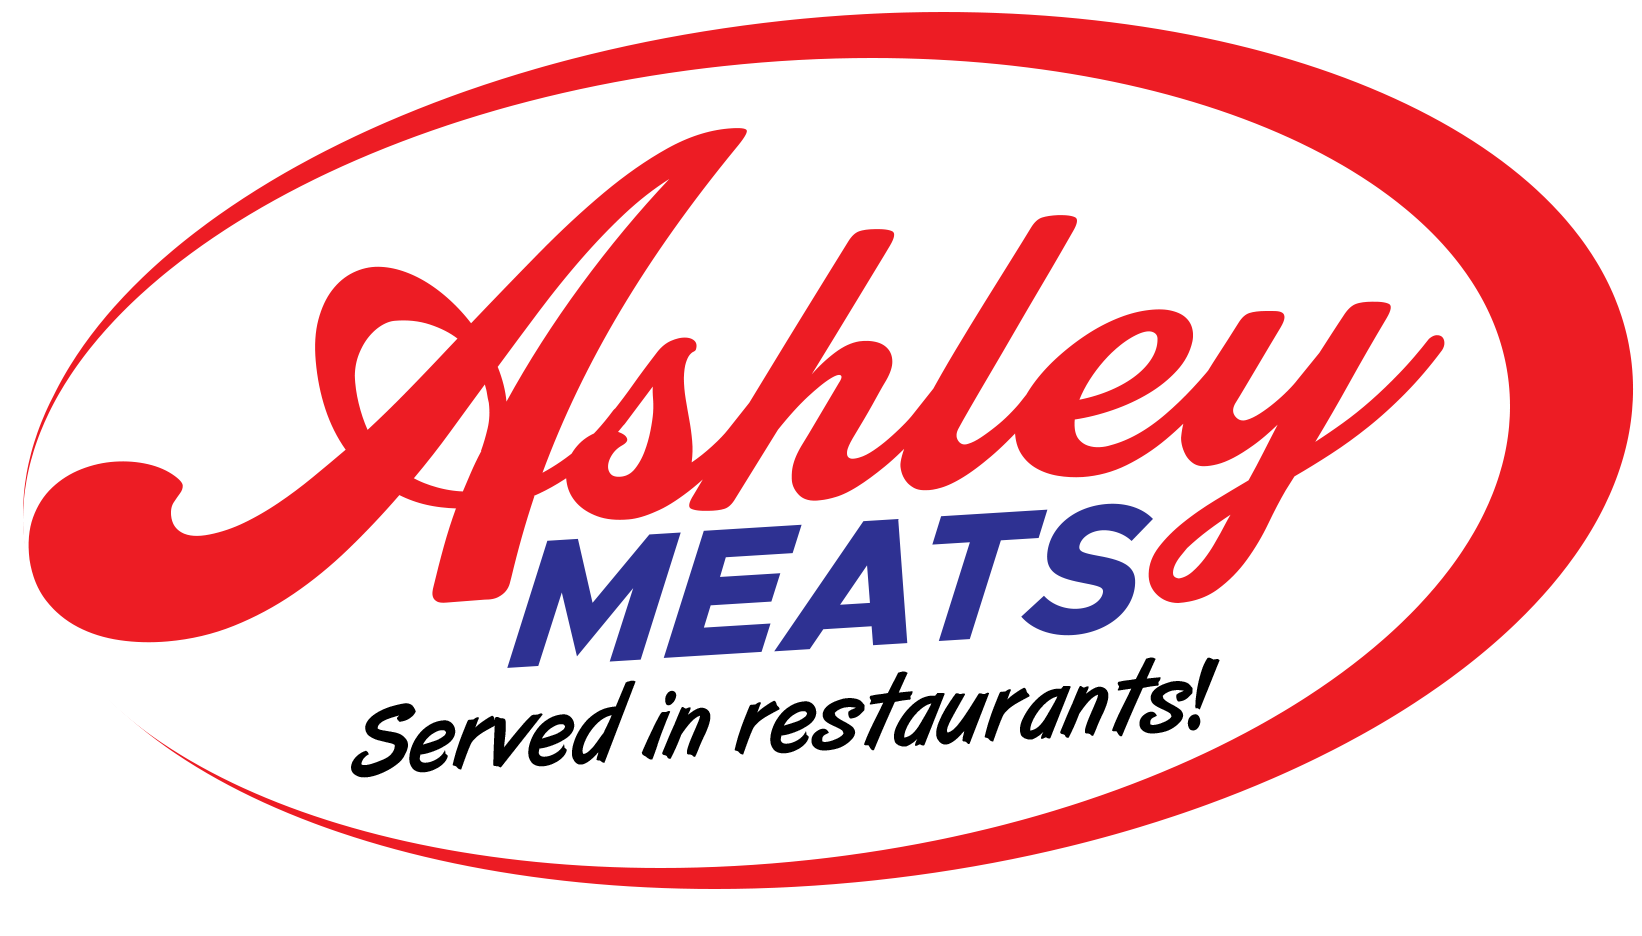 Ashley Meats